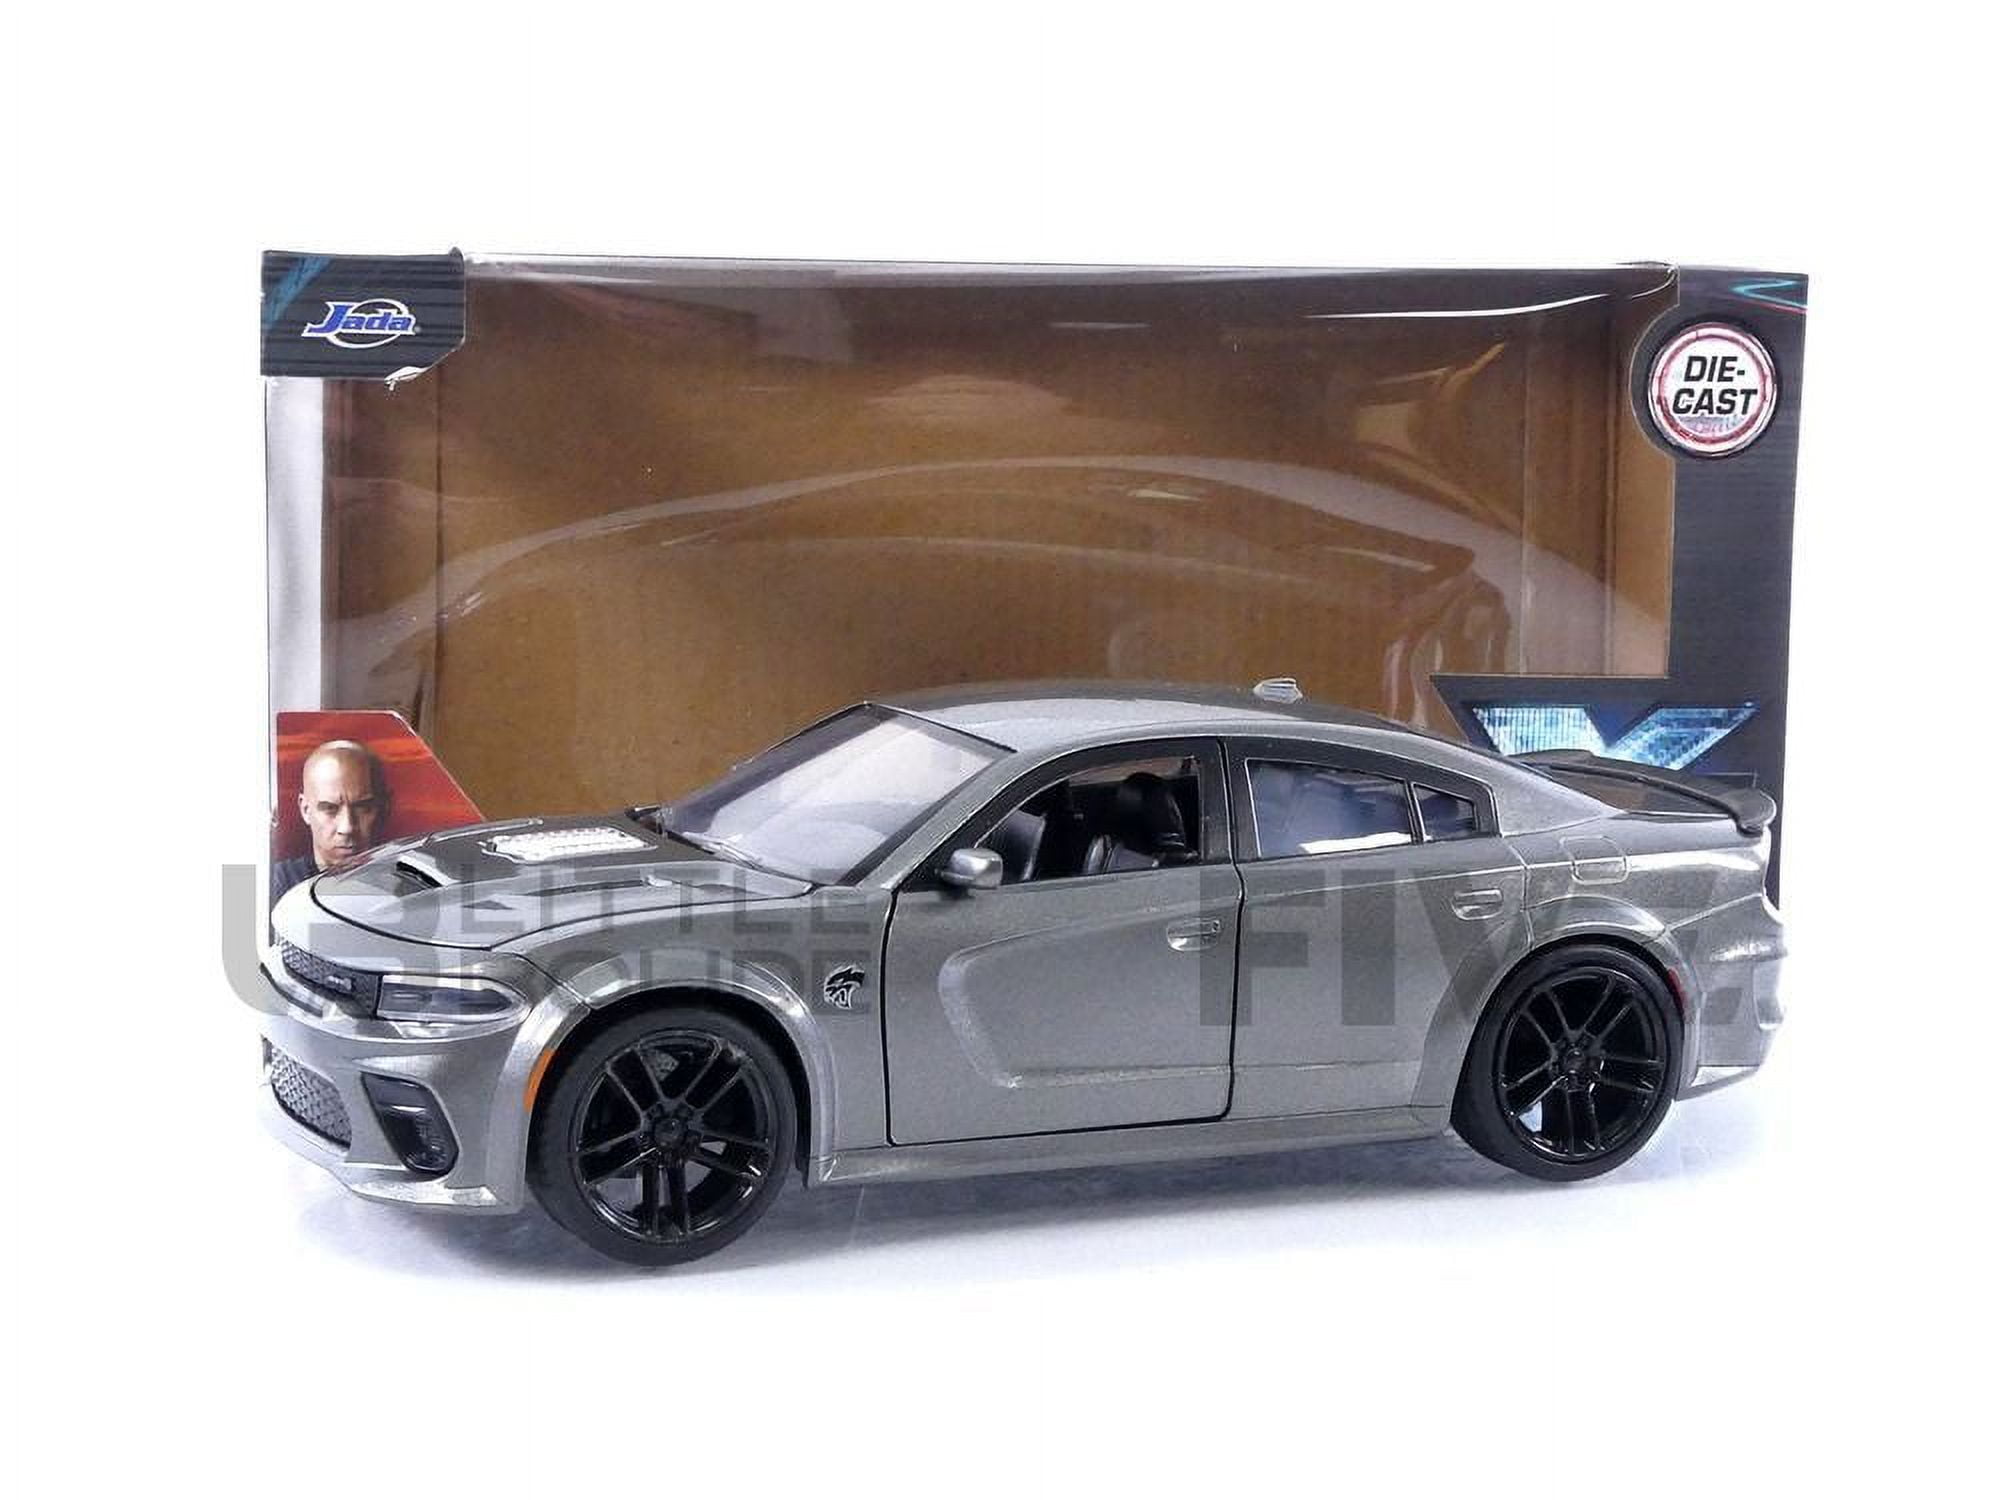 2021 Dodge Charger SRT Hellcat Metallic Fast X 2023 Movie Fast & Furious Series 1-24 Diecast Model Car, Gray -  Endless Games, EN2950094